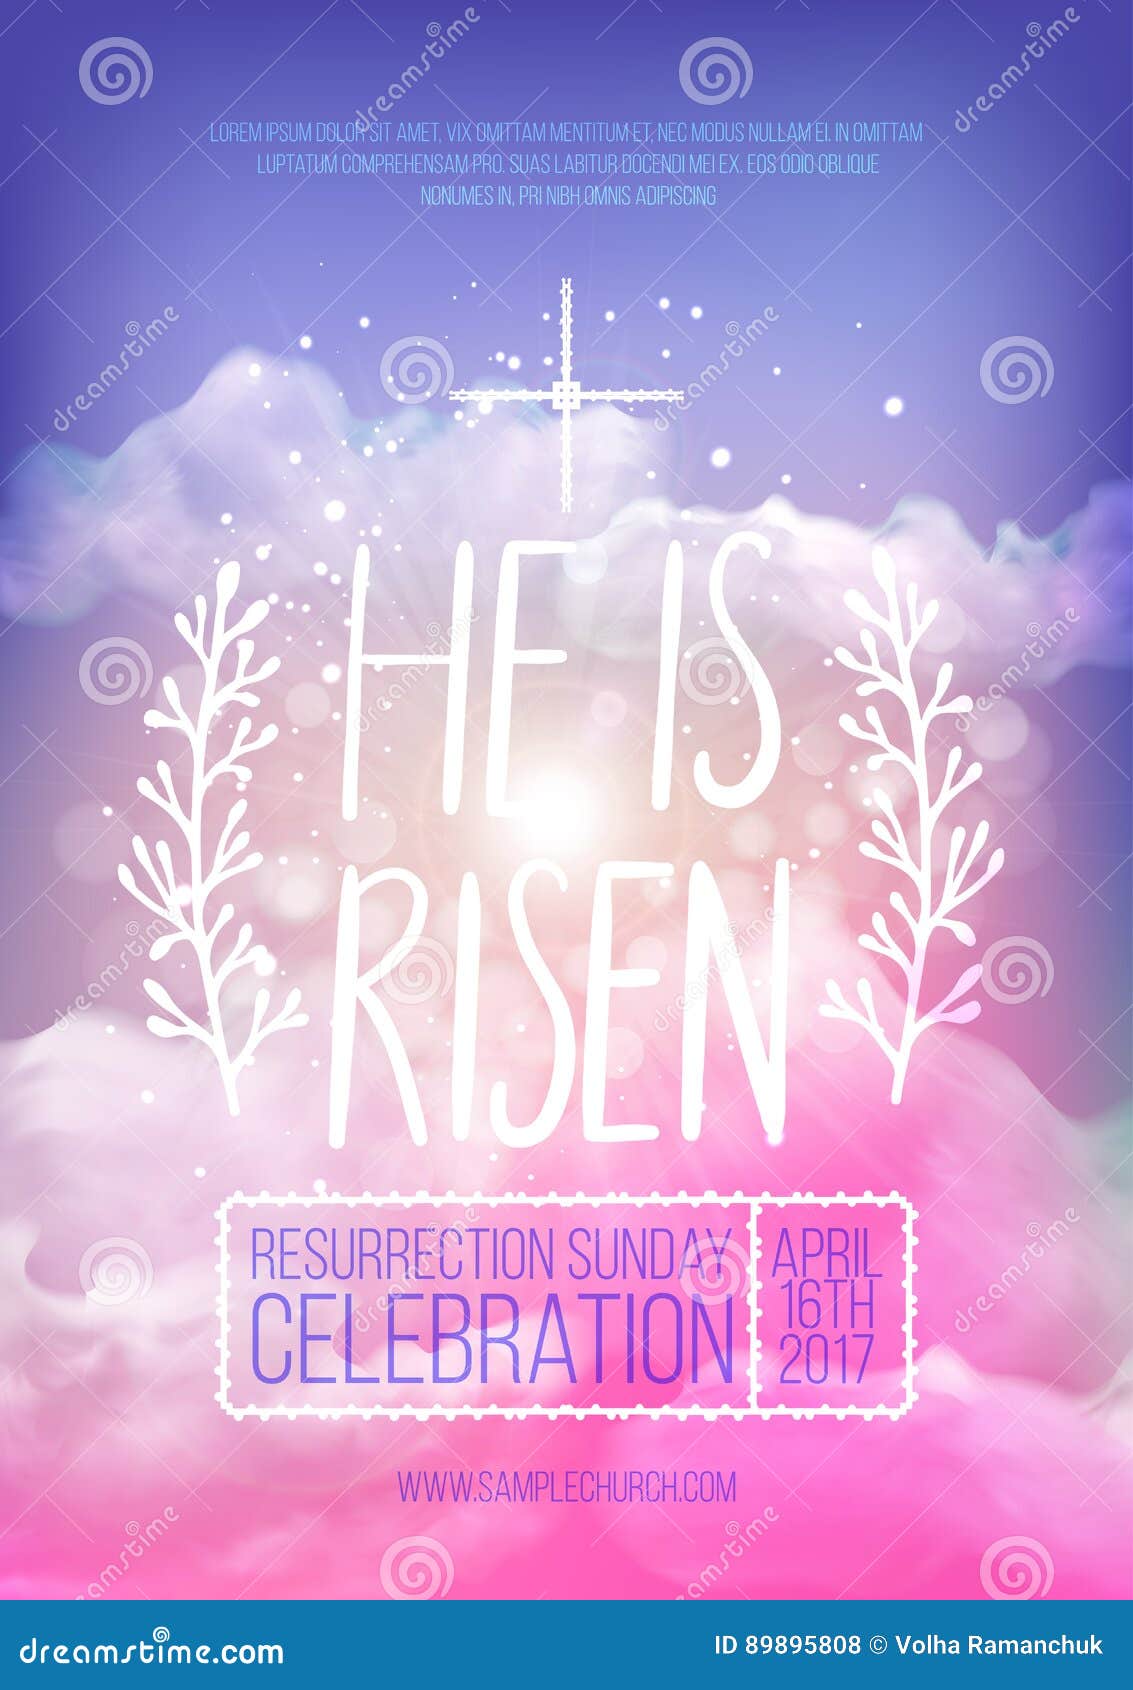 He is Risen, Easter Religious Poster Template Stock Illustration ...